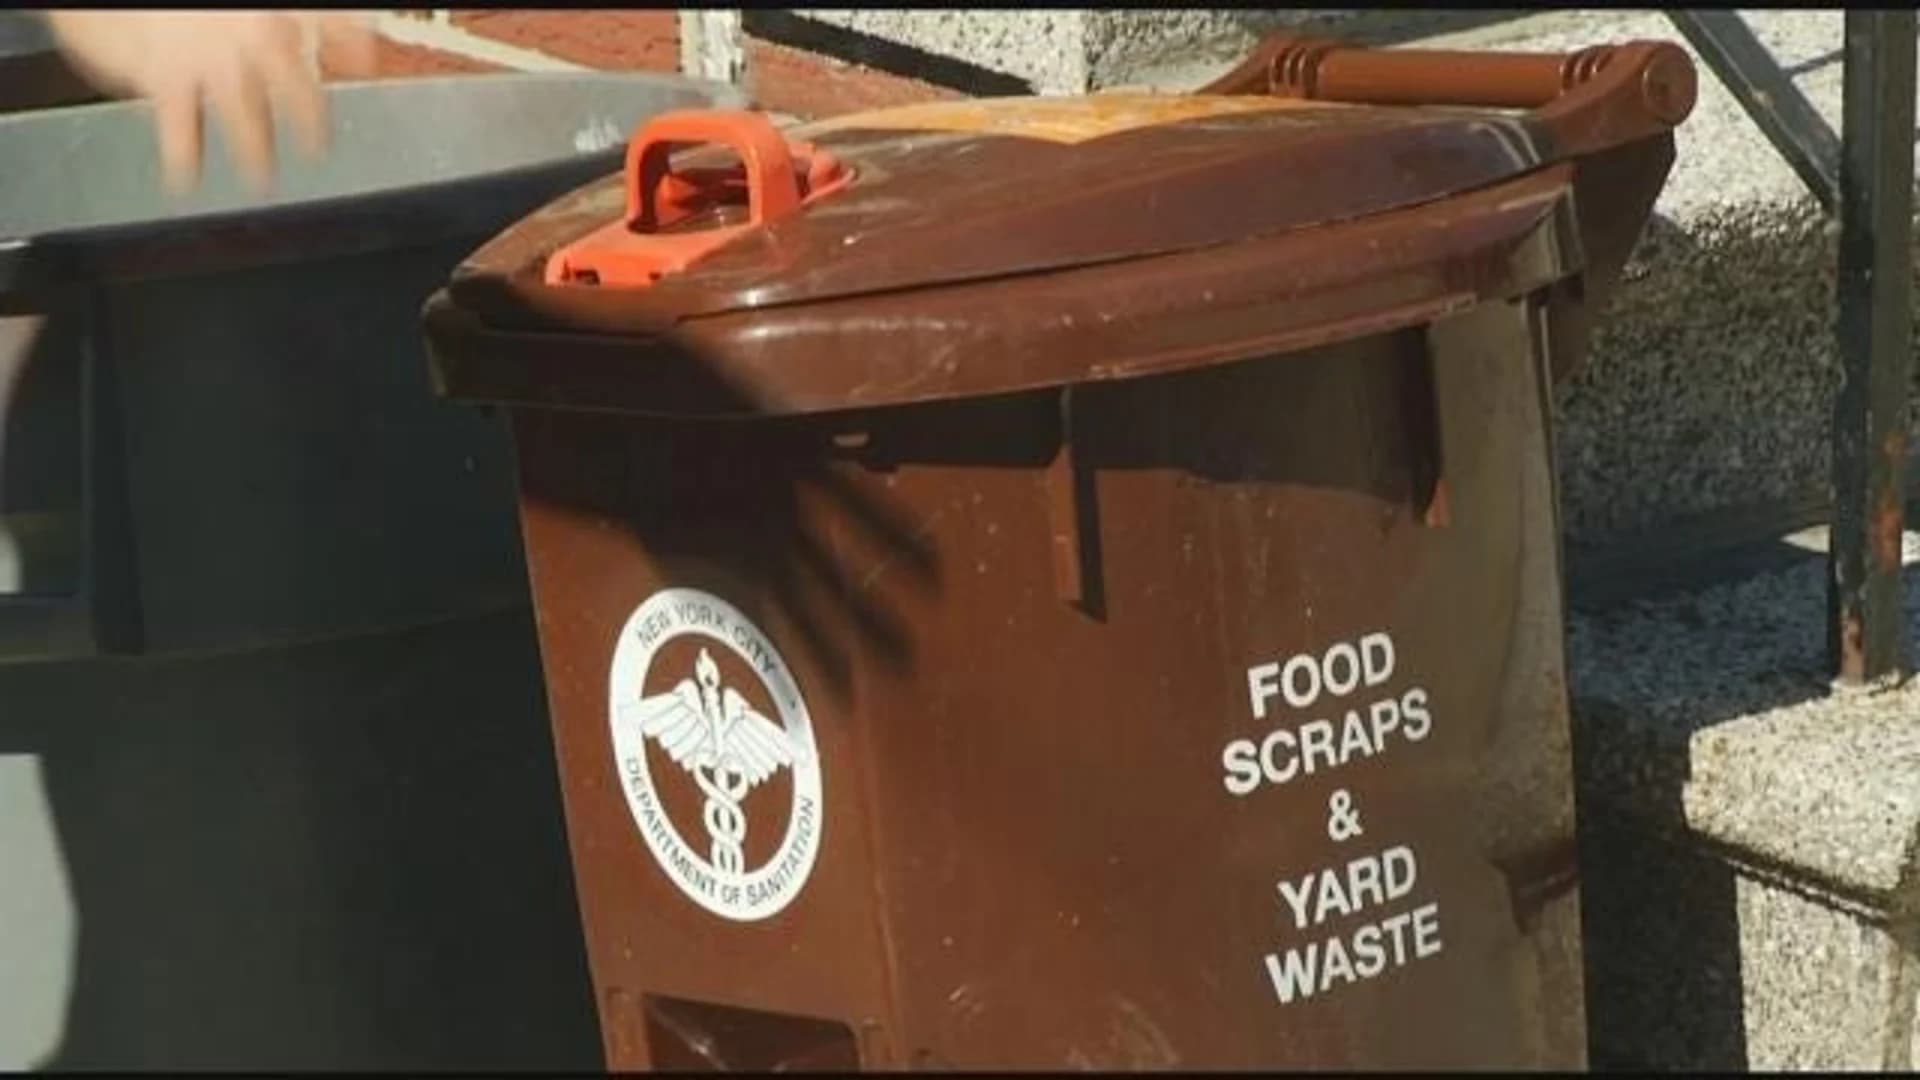 Neighbors say compost bins attract bugs, animals